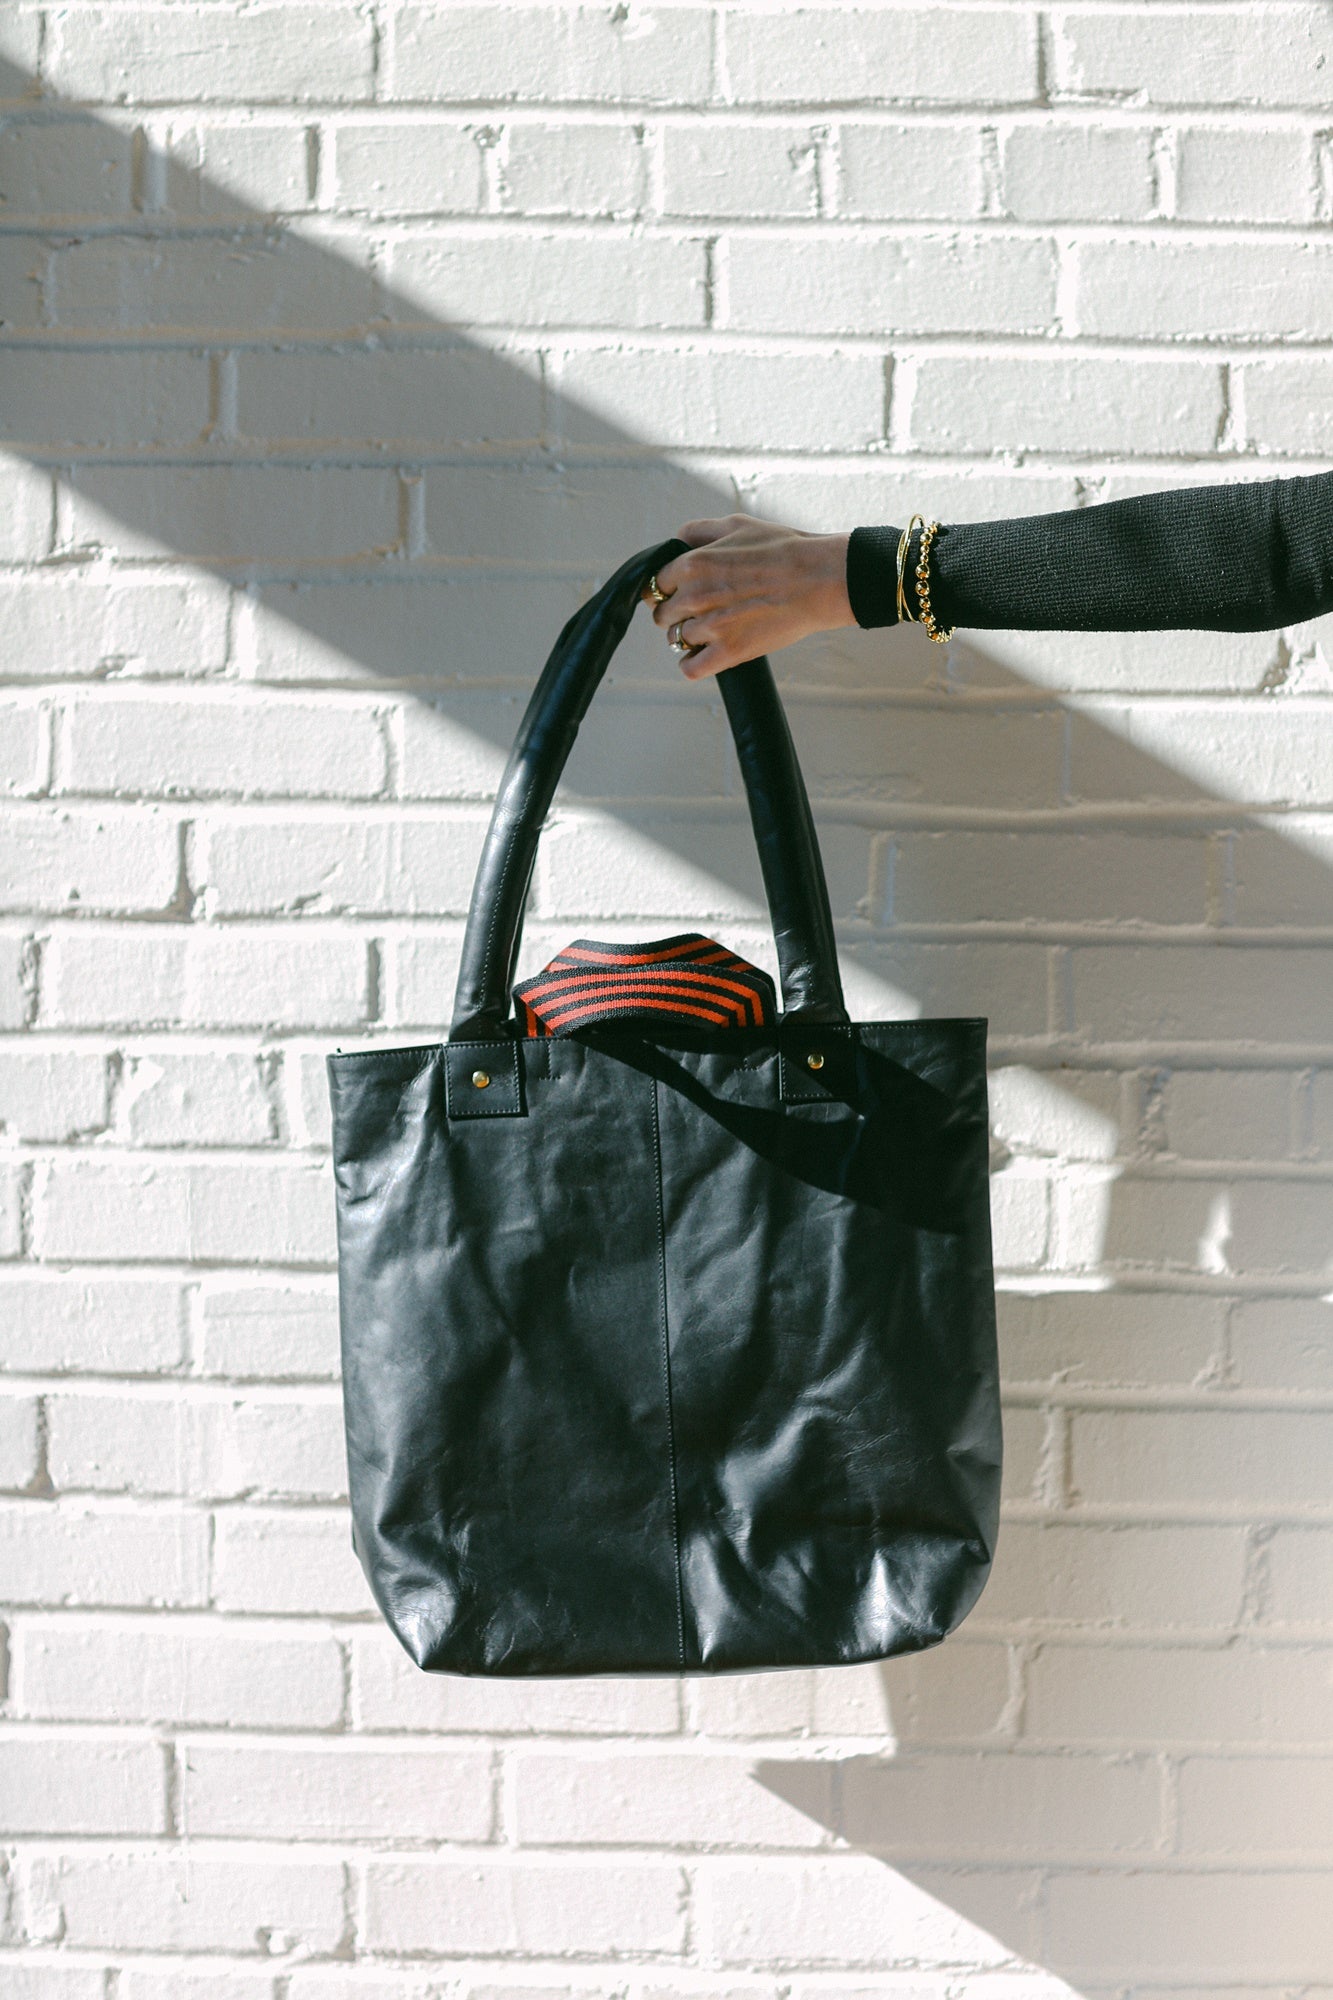 Clare V. Leather Bucket Bag